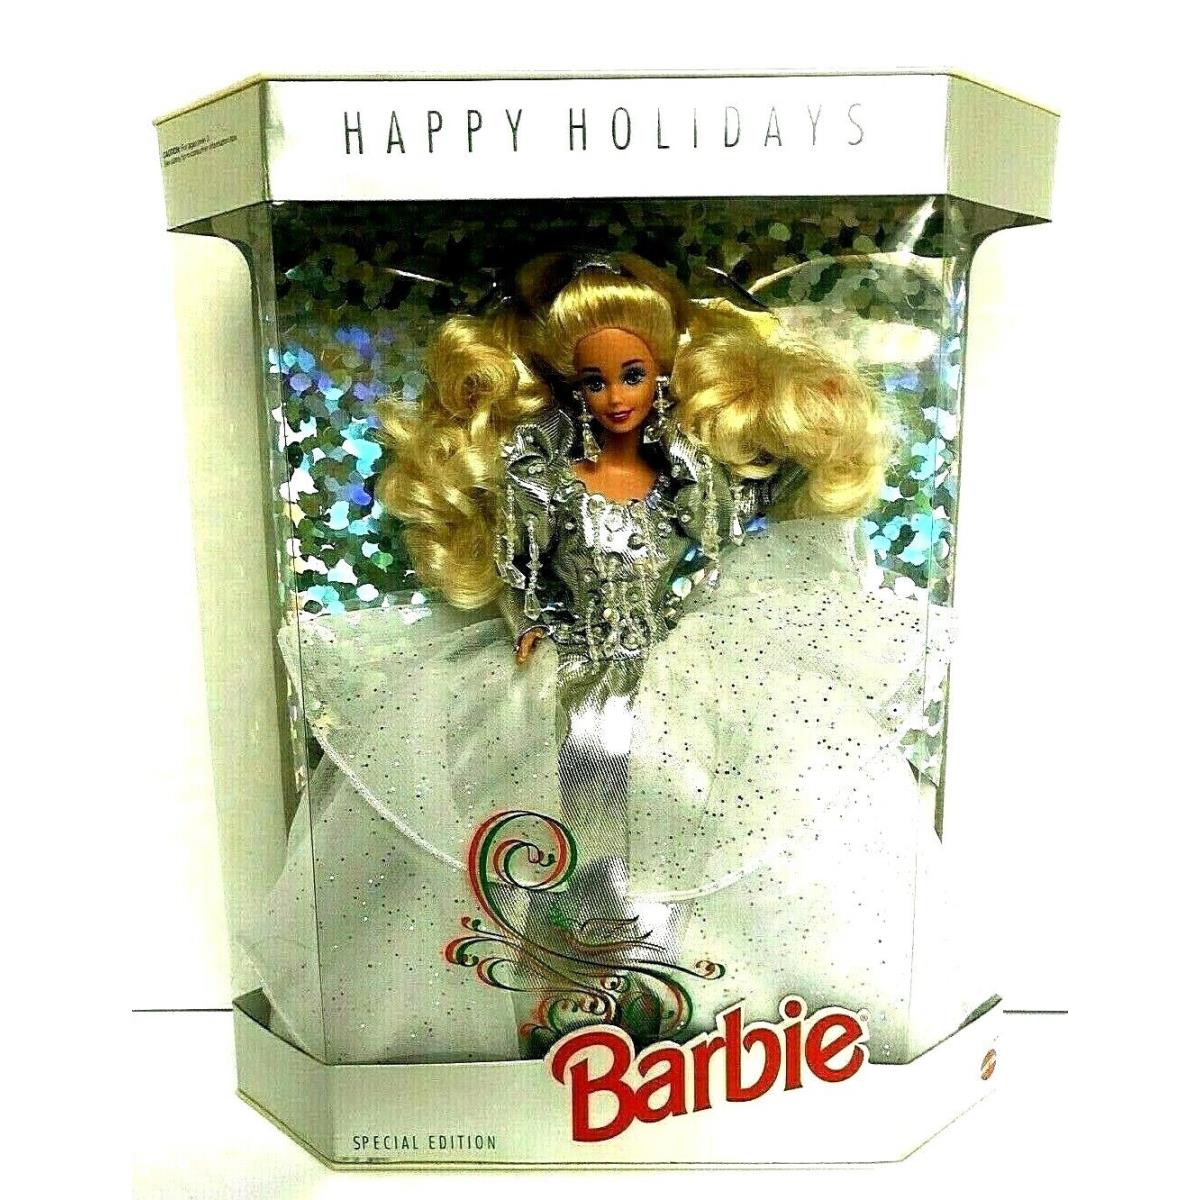 1992 Vintage Happy Holidays Barbie Doll Special Edition Mattel Nrfb